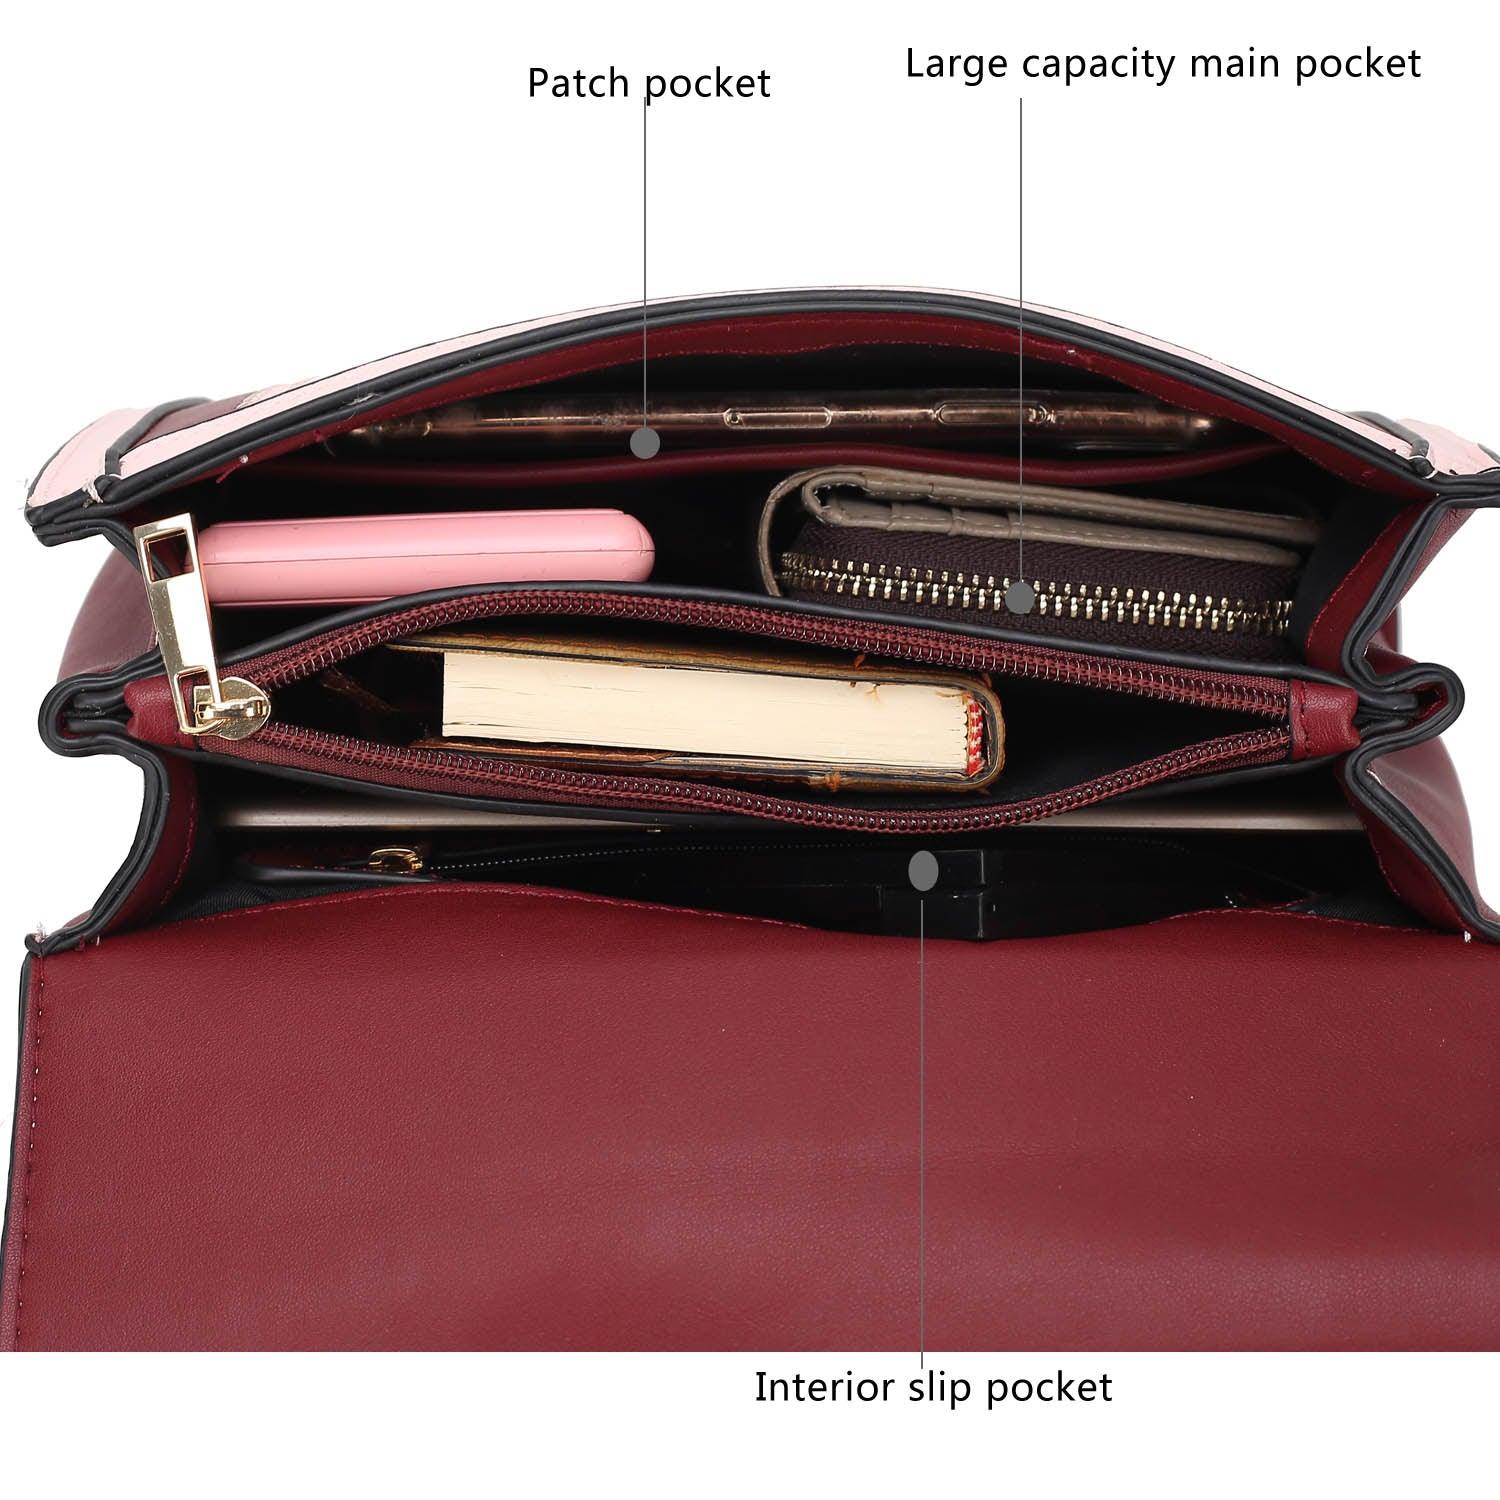 Wallets, Handbags & Accessories Esther Crossbody Bag